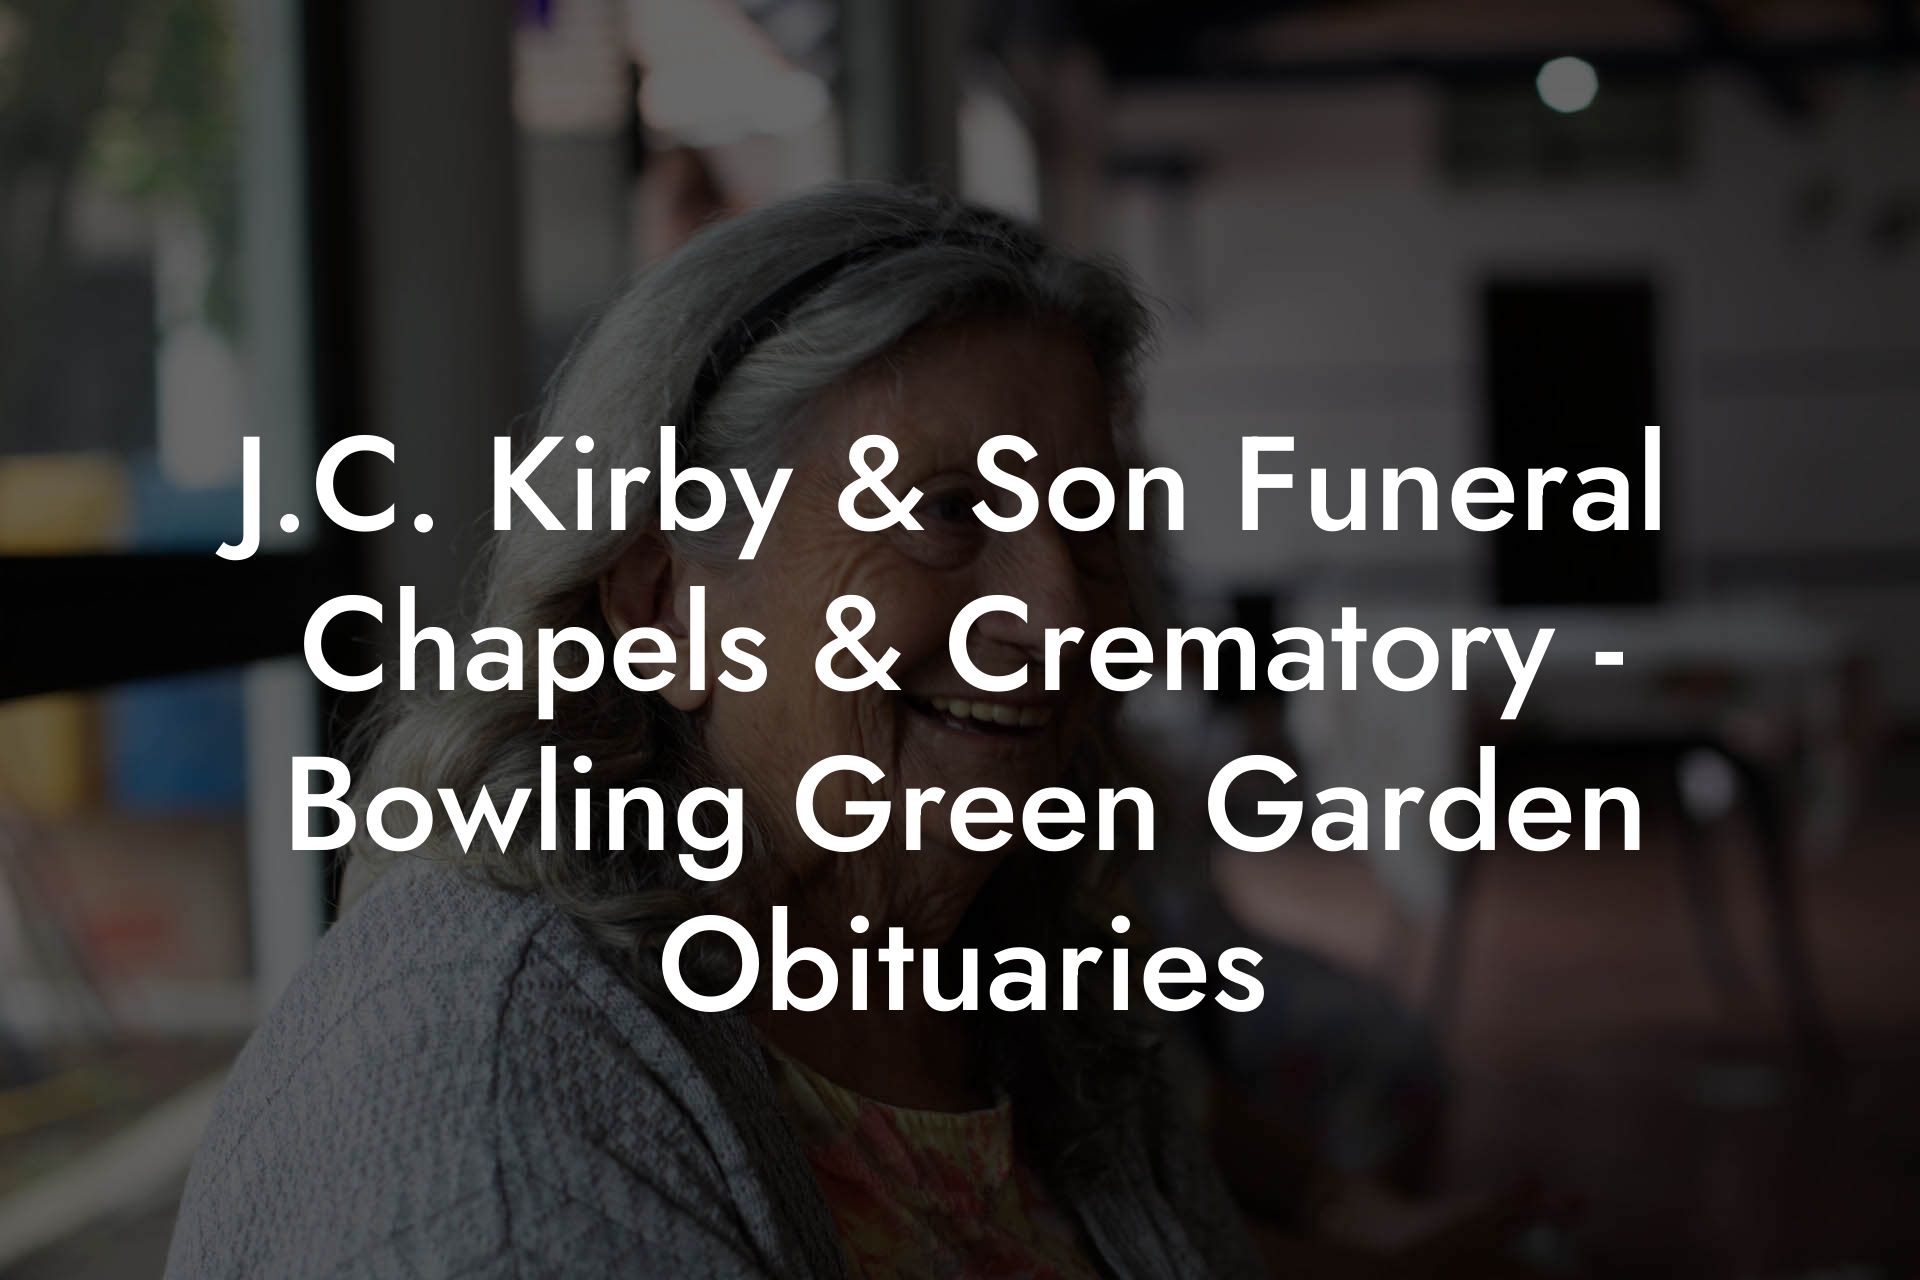 J.C. Kirby & Son Funeral Chapels & Crematory - Bowling Green Garden Obituaries